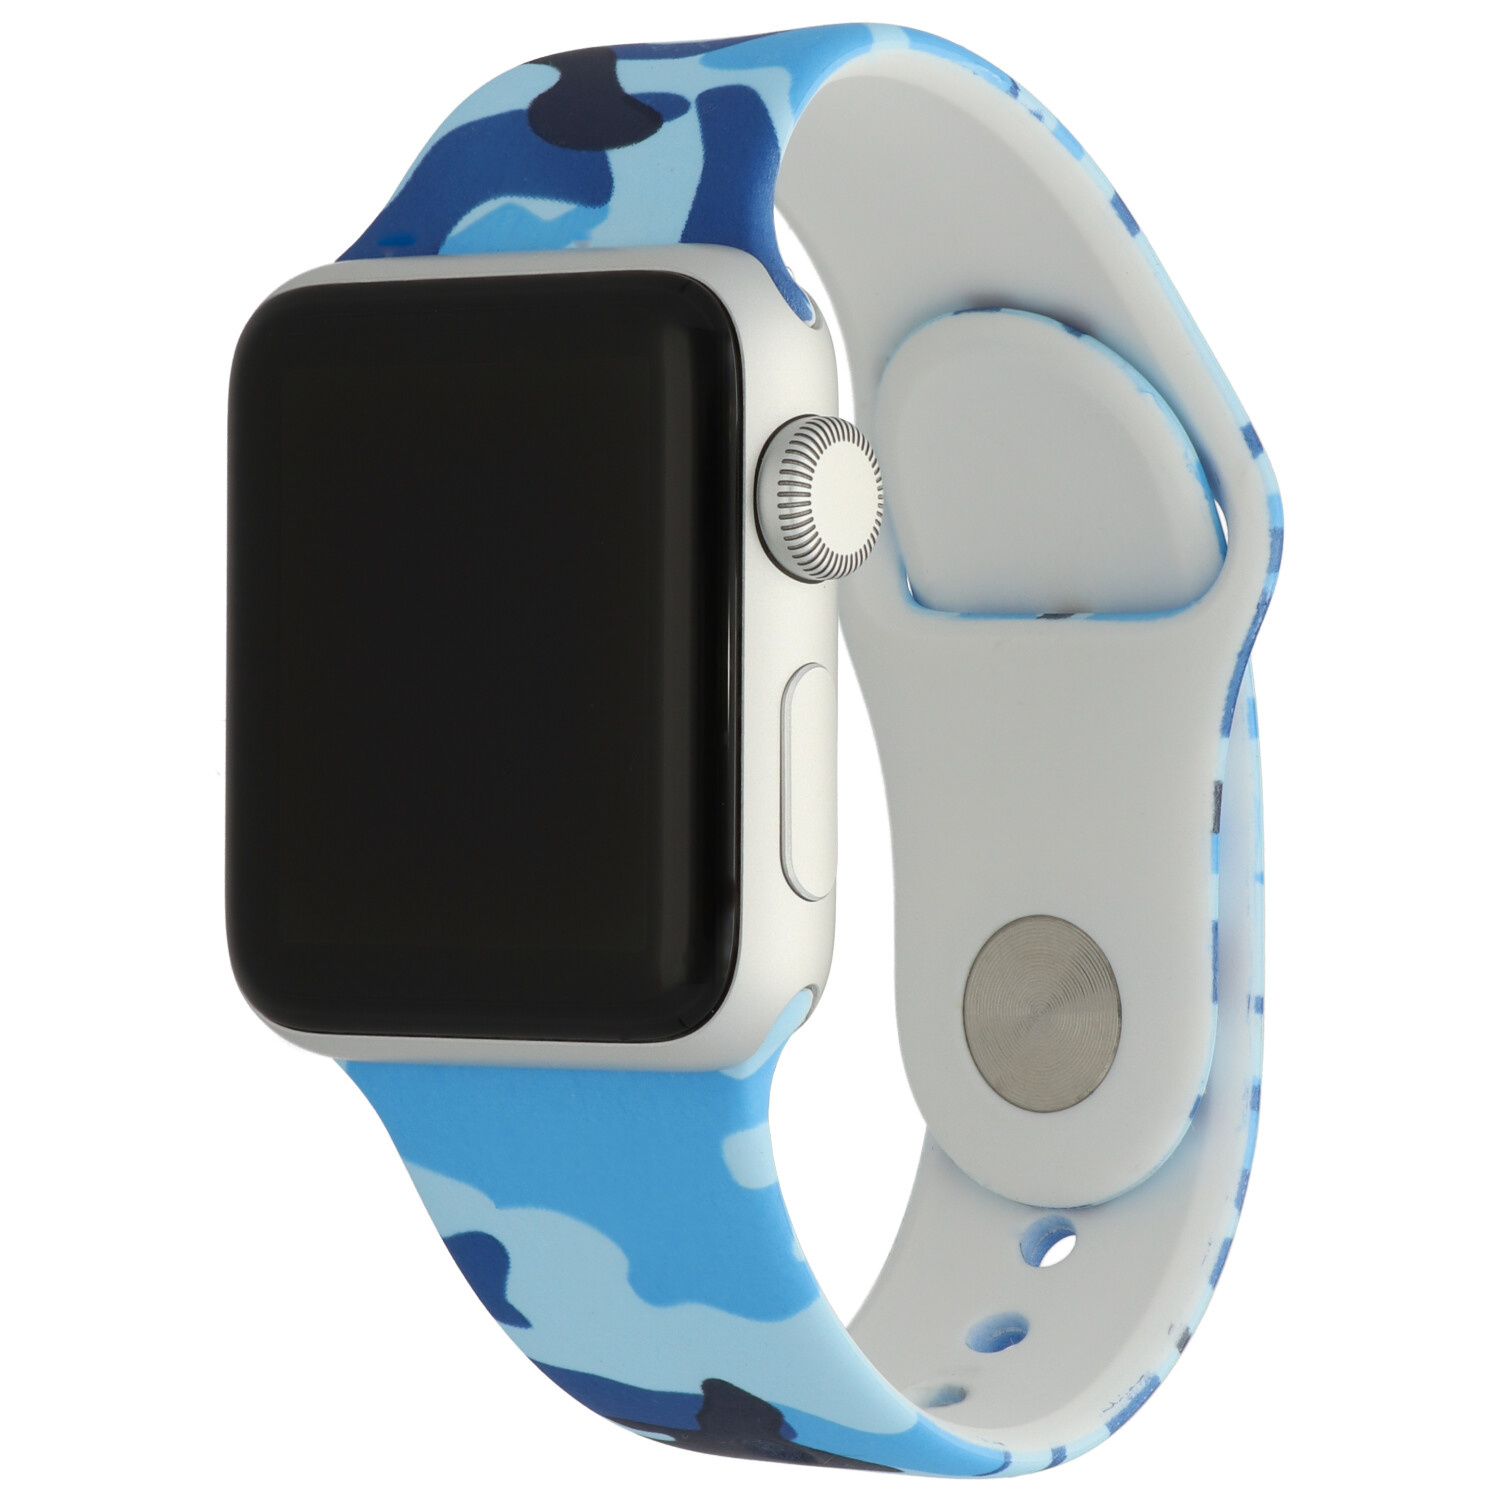 Apple Watch druck Sportarmband - Camouflage blau